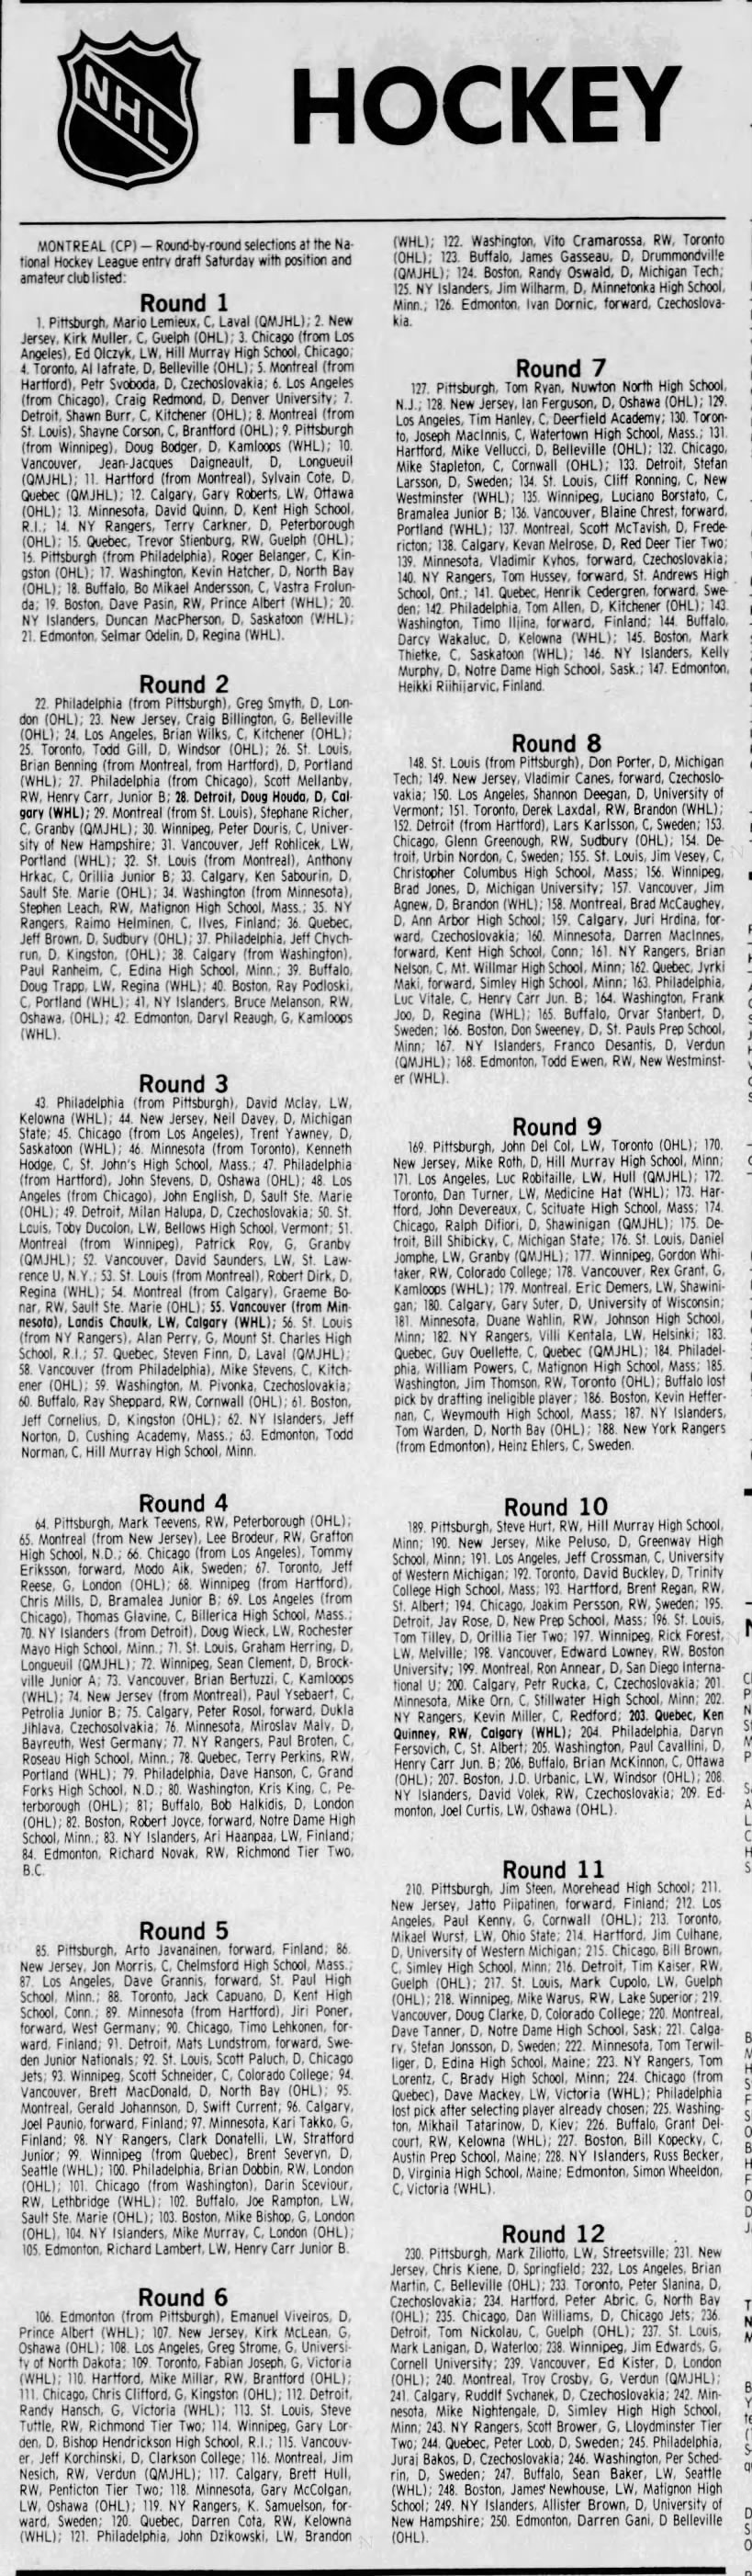 1984 NHL Entry Draft
Montreal, PQ